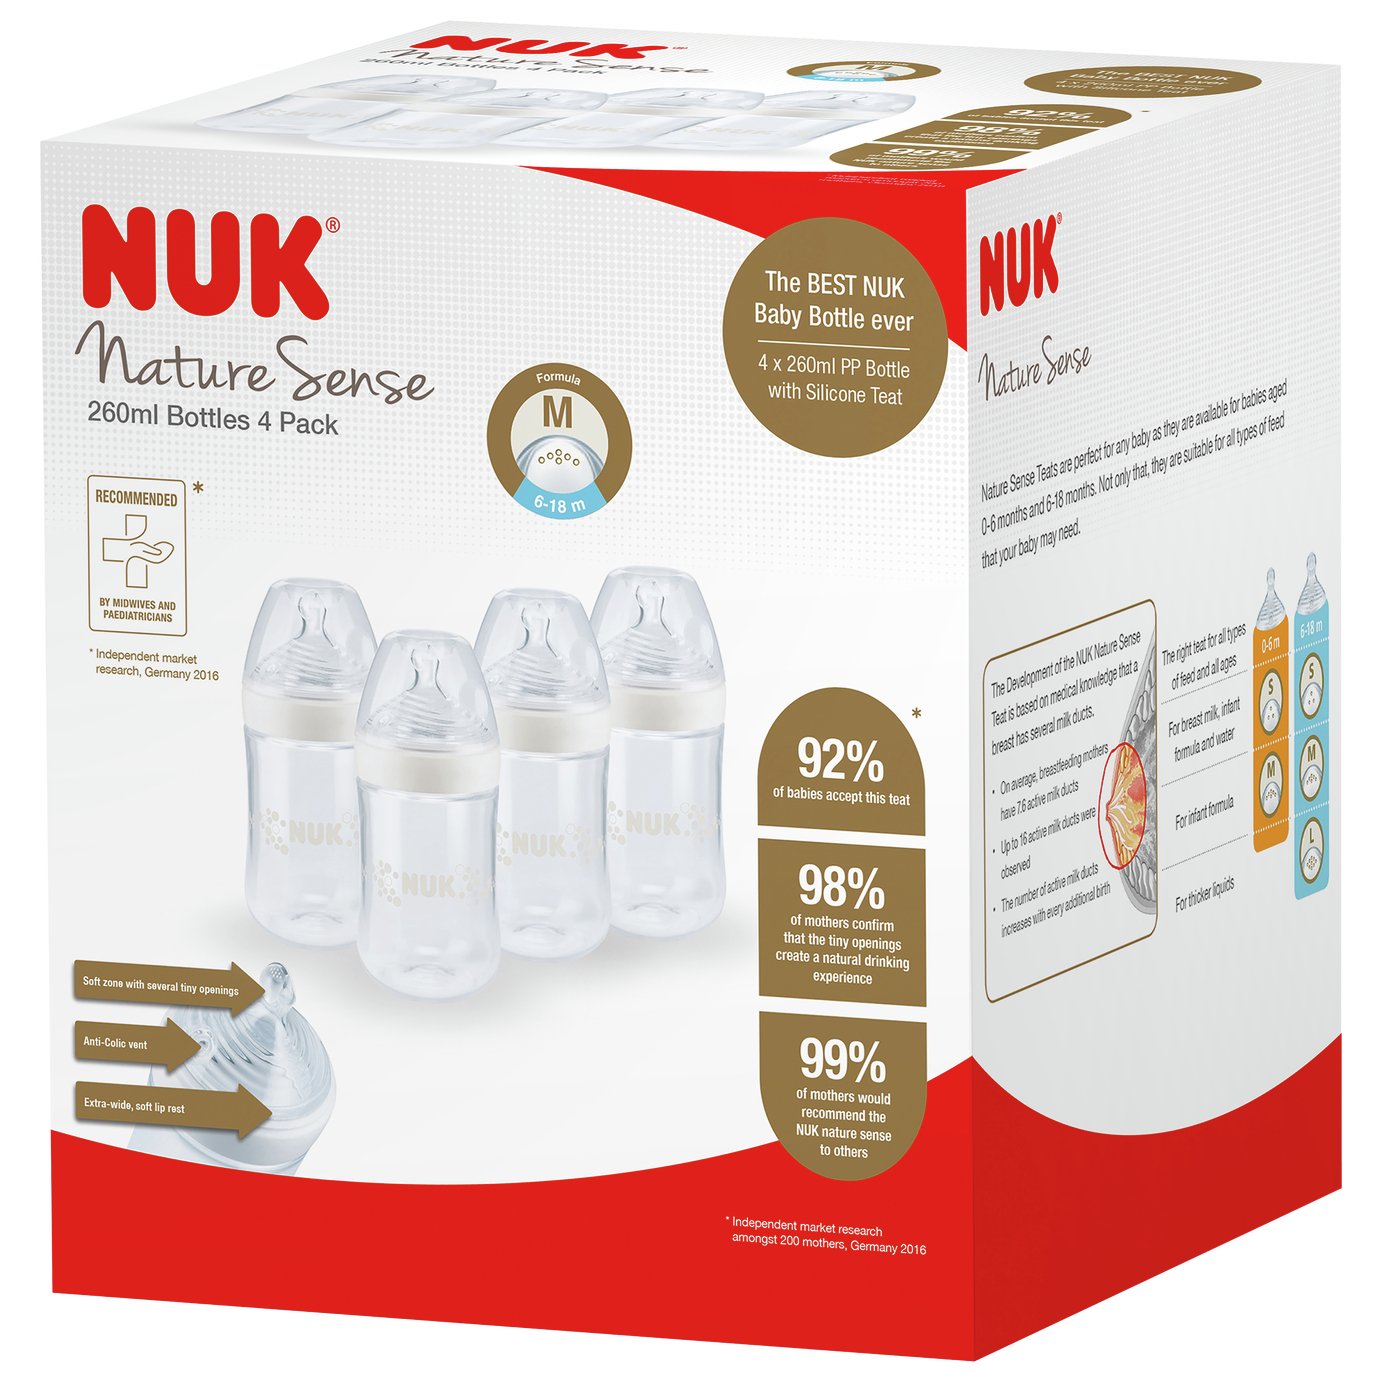 NUK Nature Sense 260ml Bottles Review